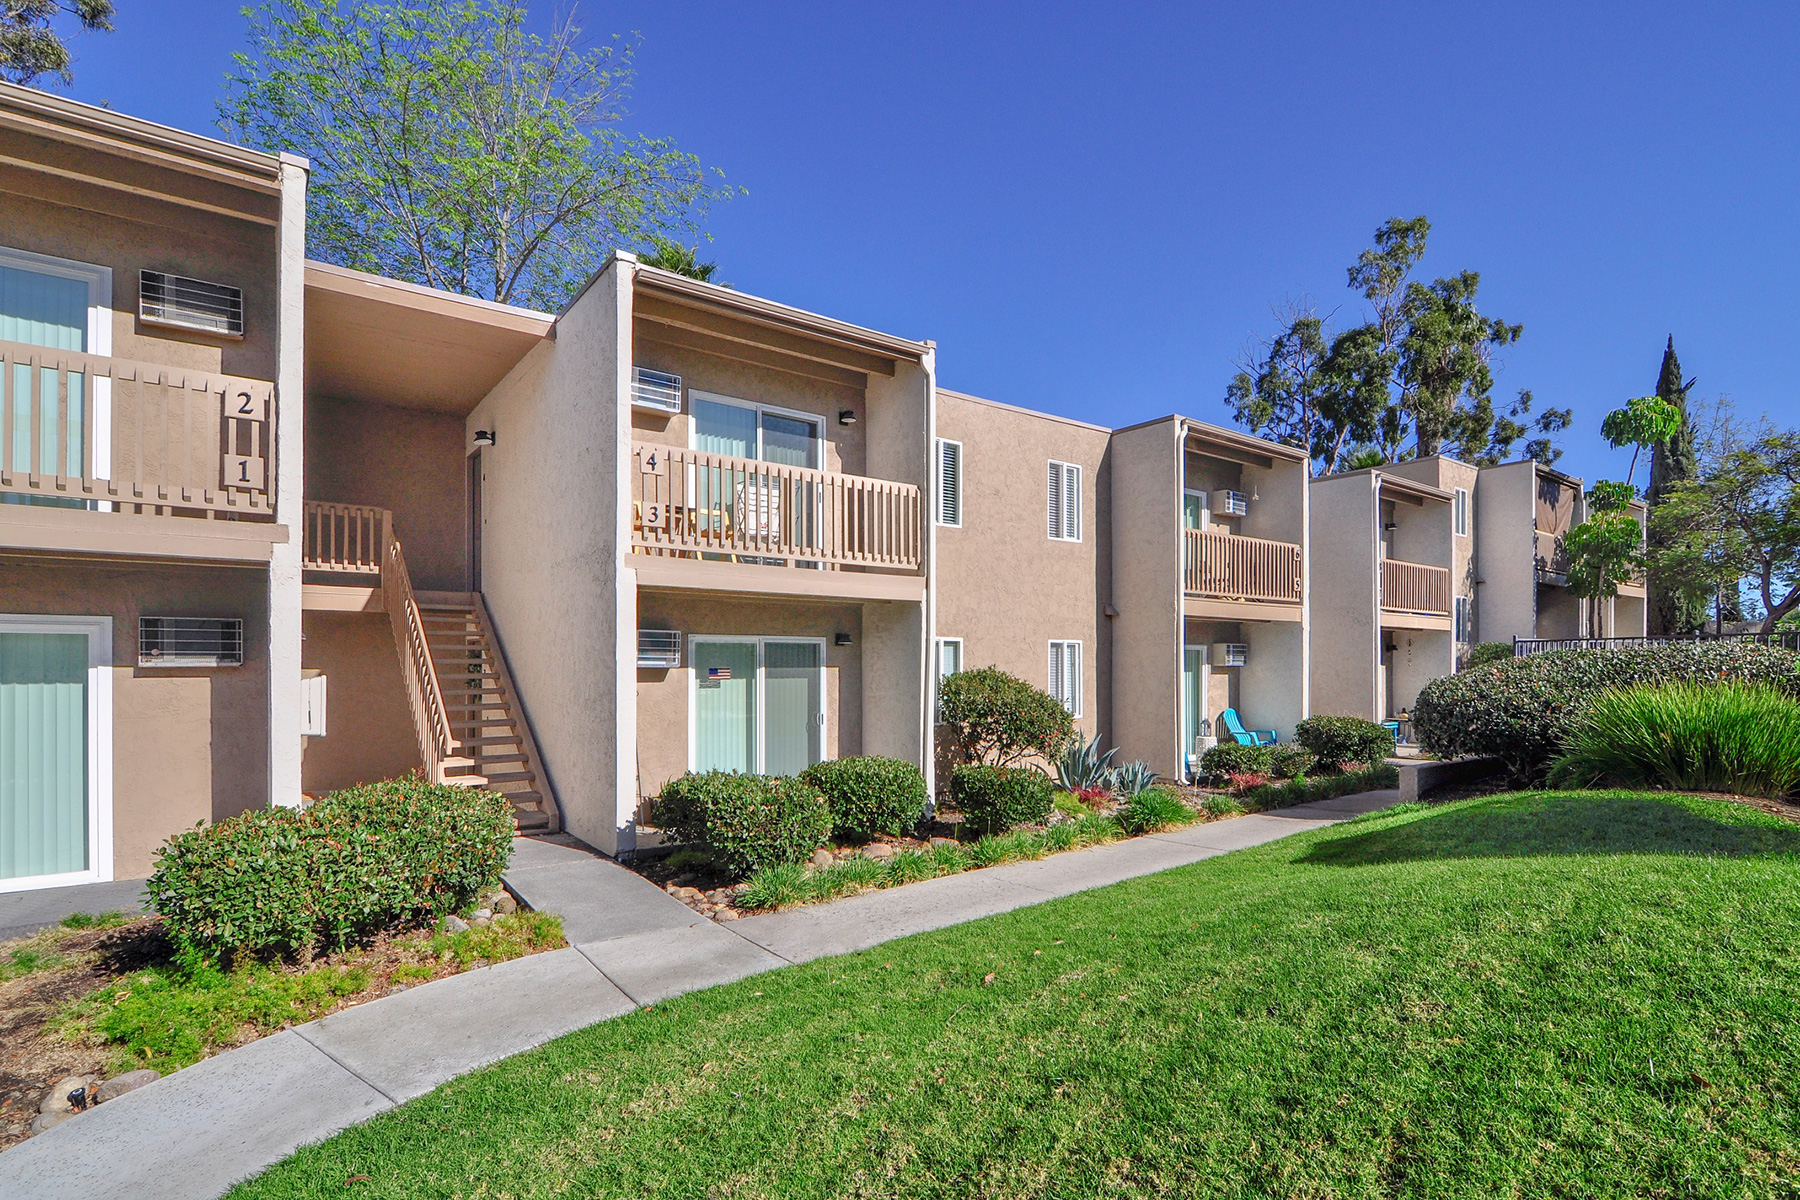 La Mesa Apartment Complex Sold For $14.1M | San Diego Business Journal